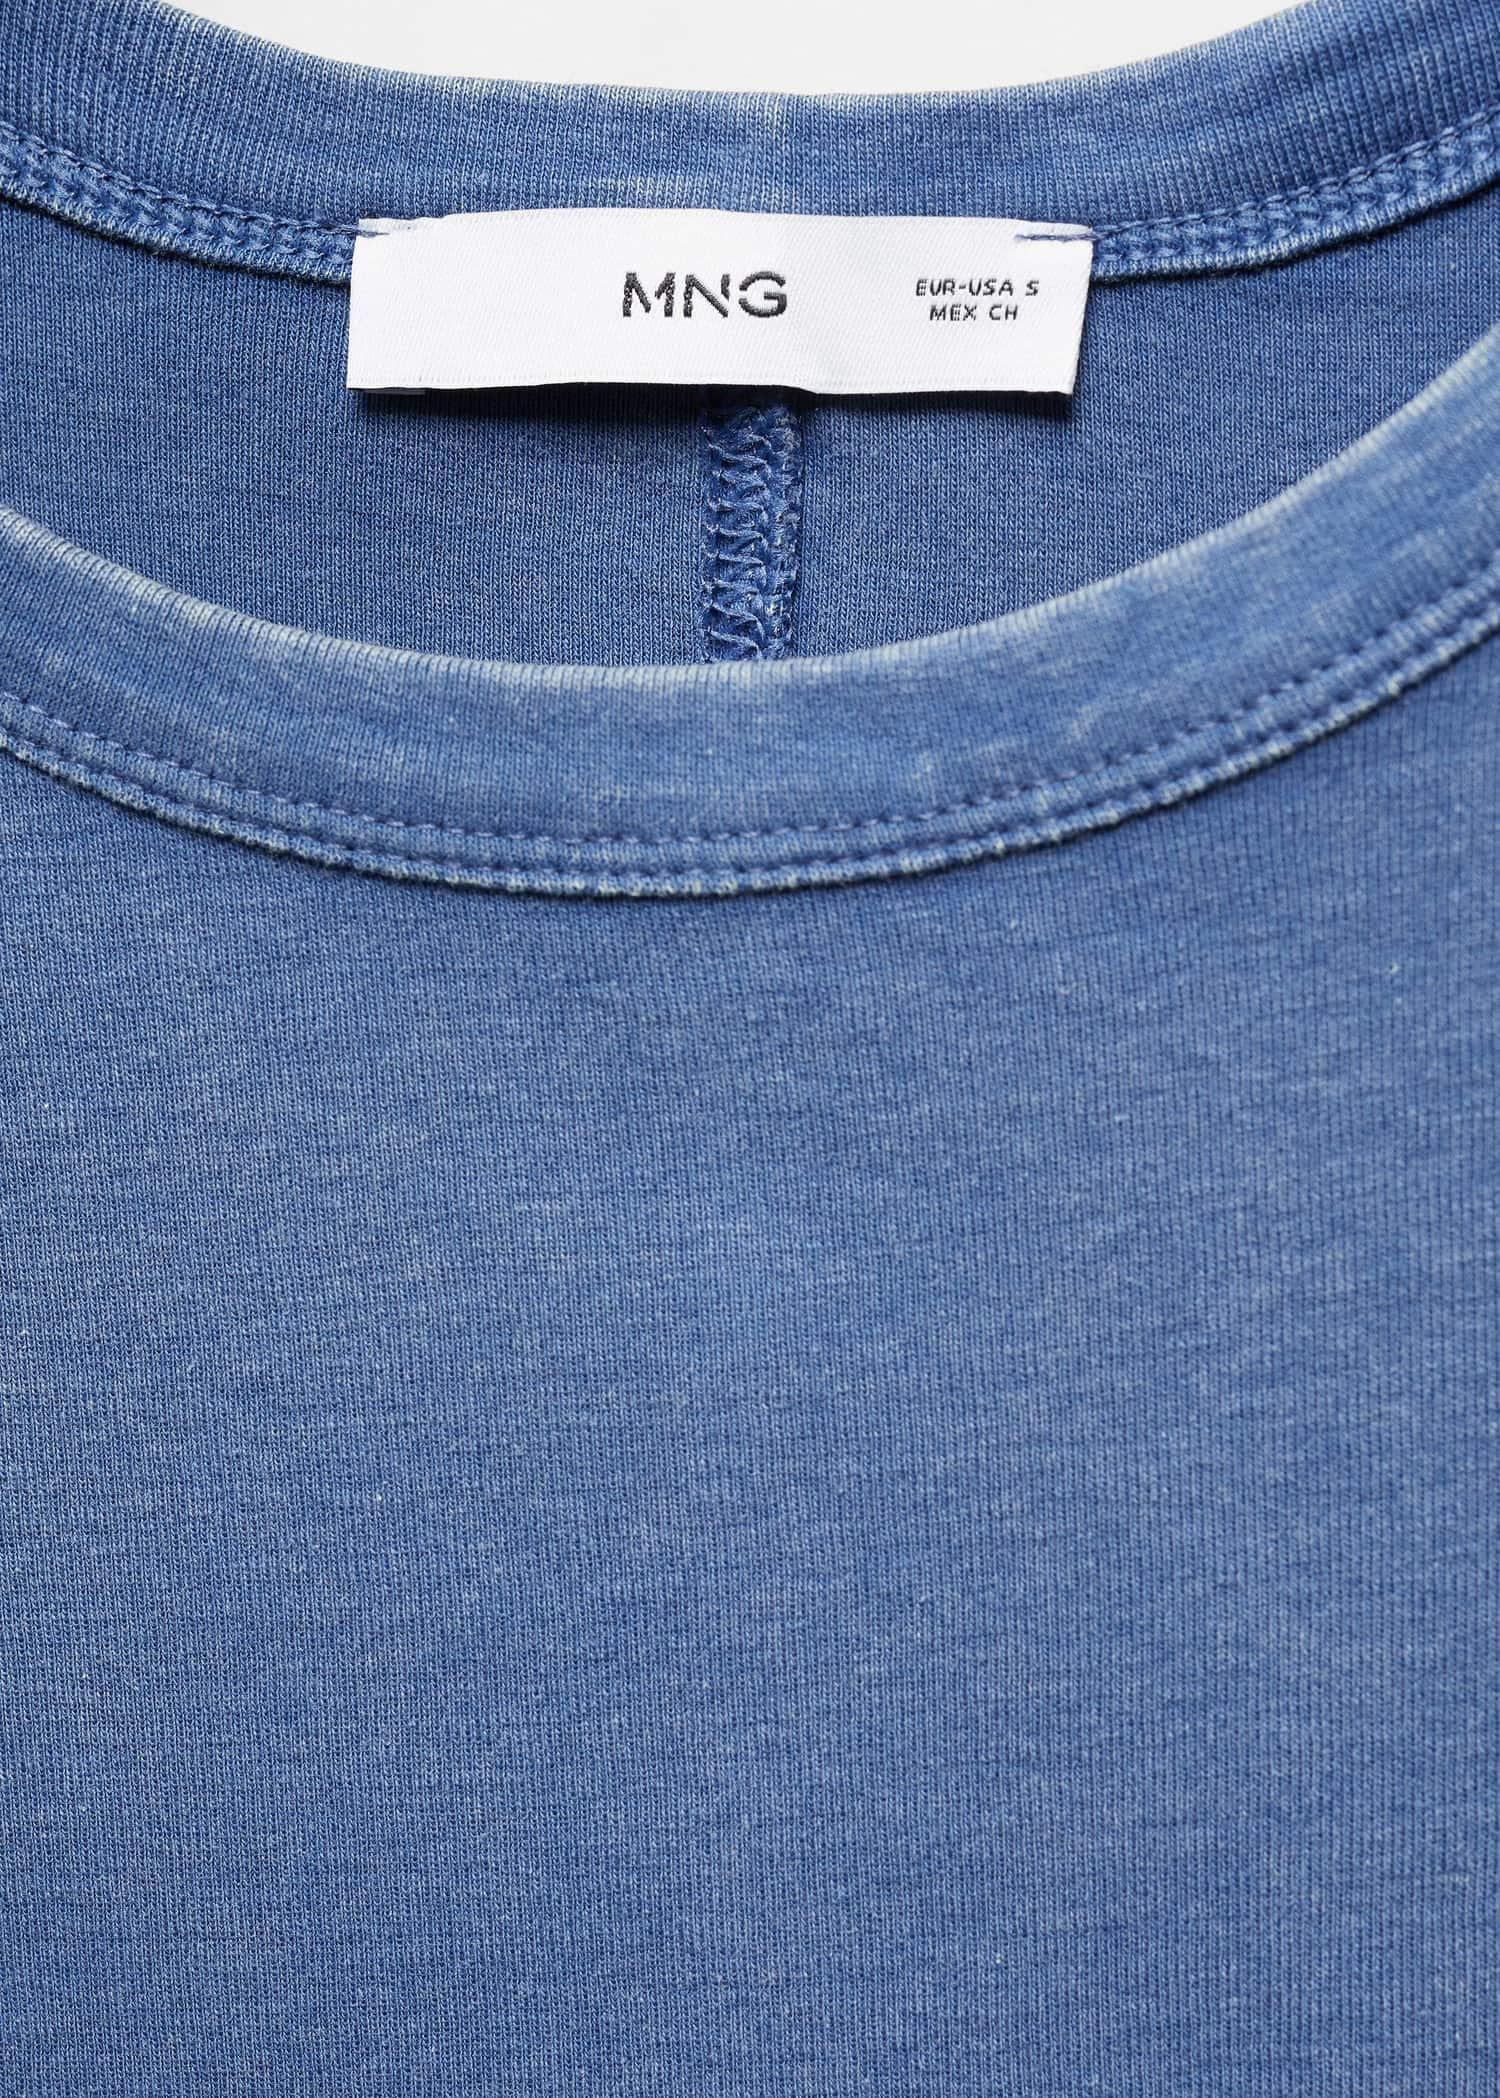 Mango - Blue Cotton T-Shirt